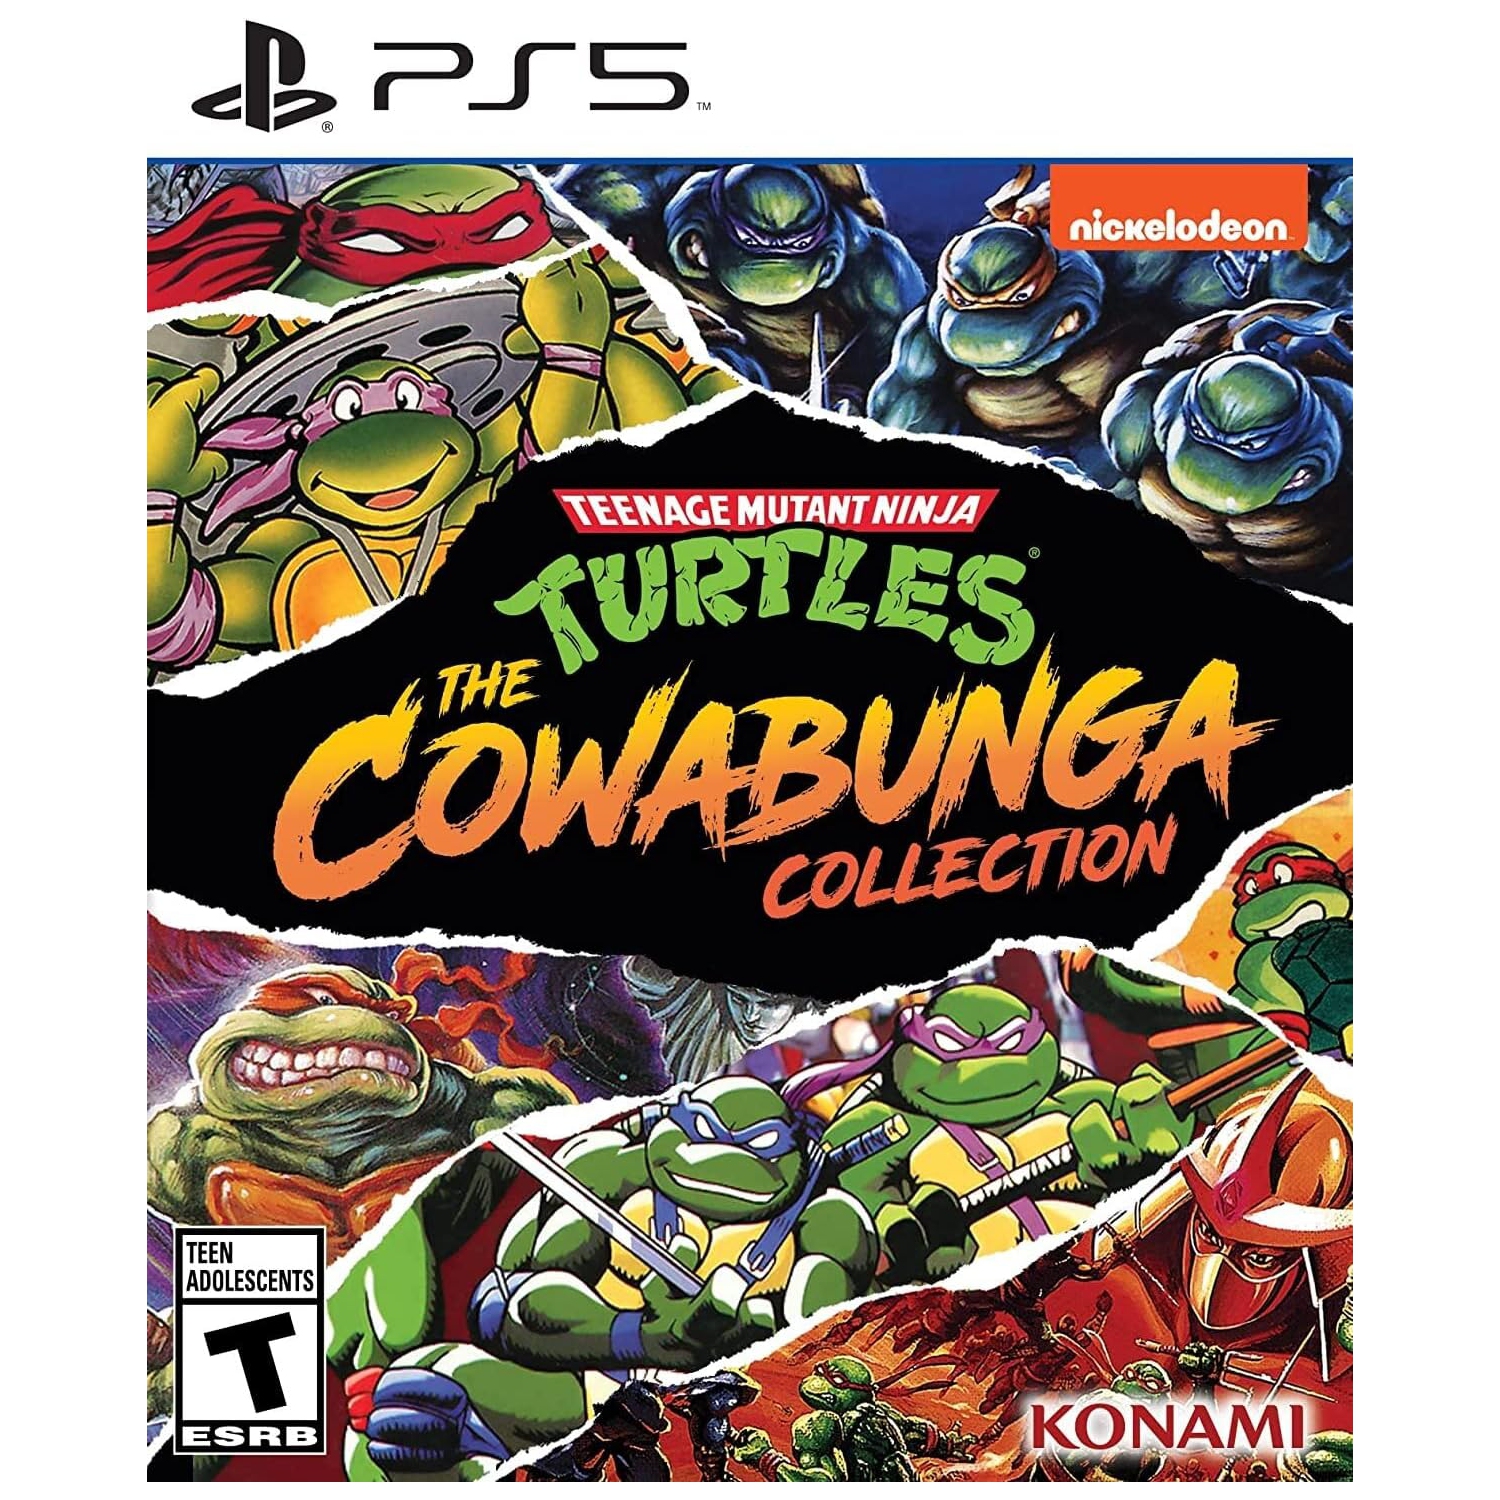 Teenage Mutant Ninja Turtles: The Cowabunga Collection - PlayStation 5 Standard Edition